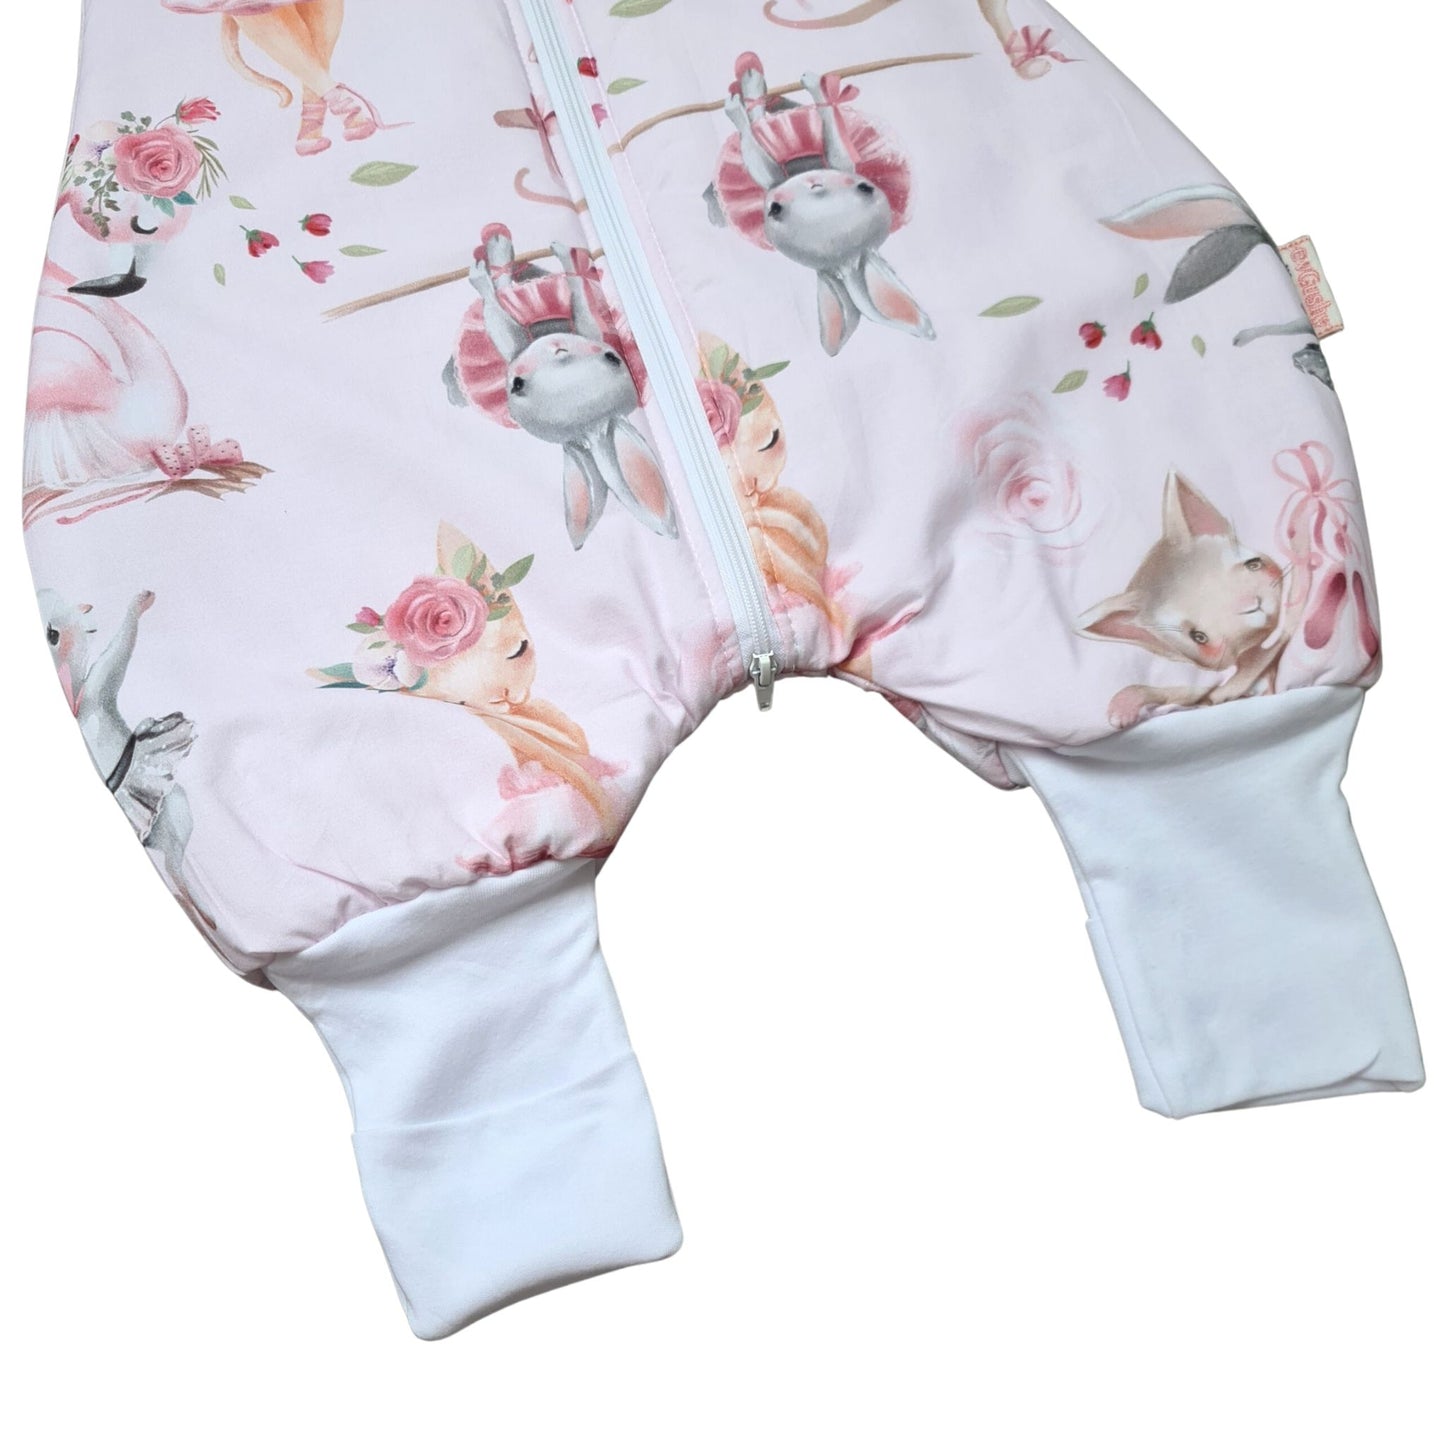 evcushy baby and toddler sleeping bag with feet sleep sack 100% cotton pink 2.5 tog with ballerinas has foldable feet